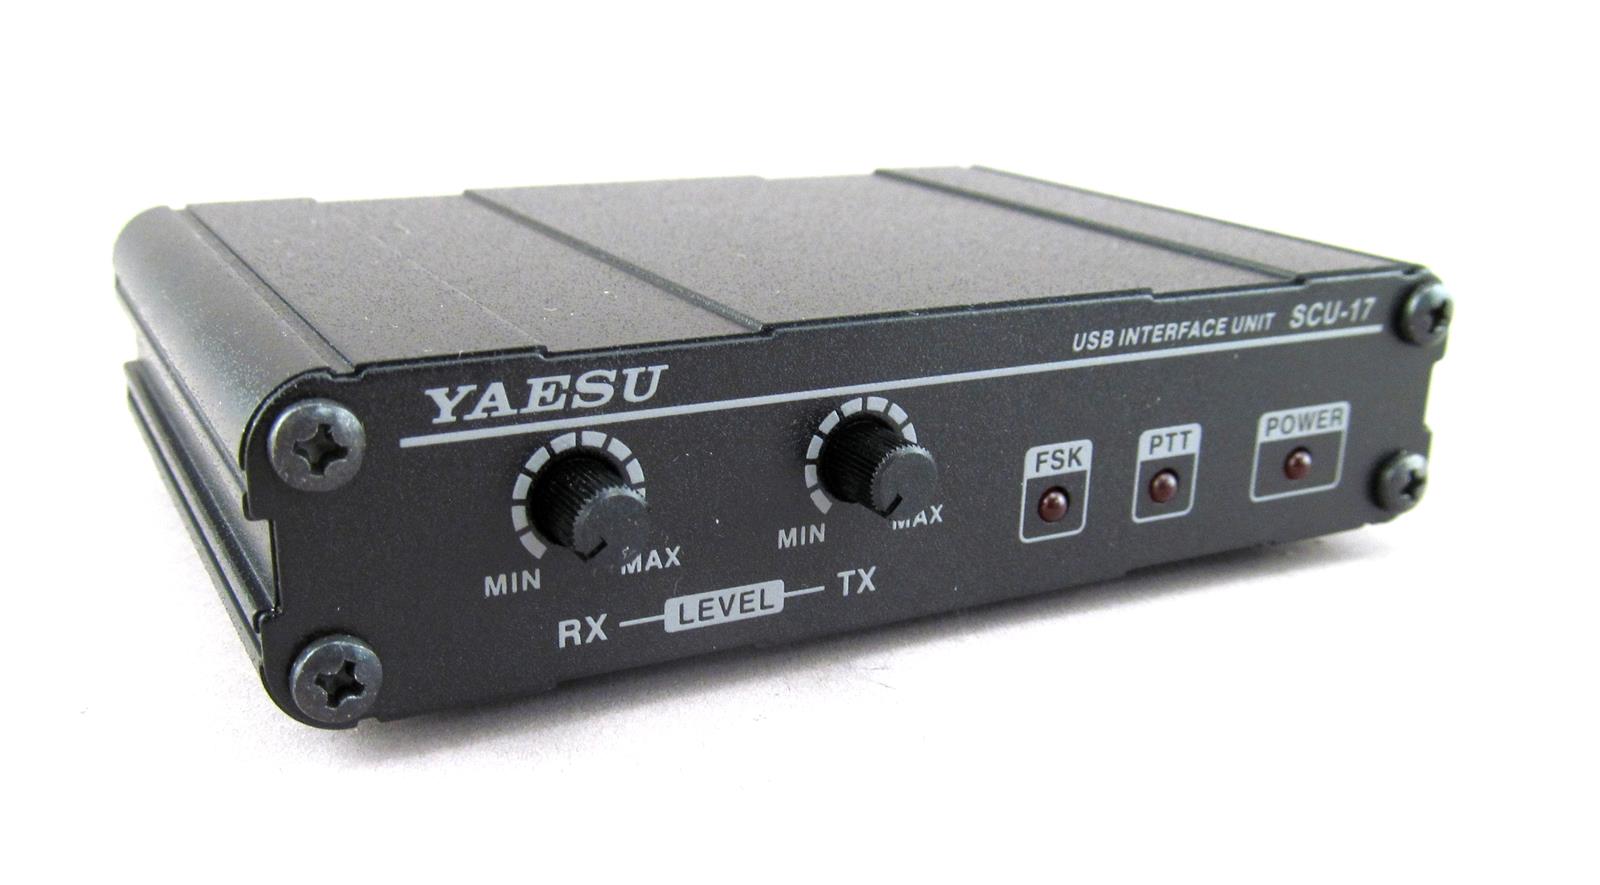 Программатор YAESU SCU-17 интерфейс USB Unit